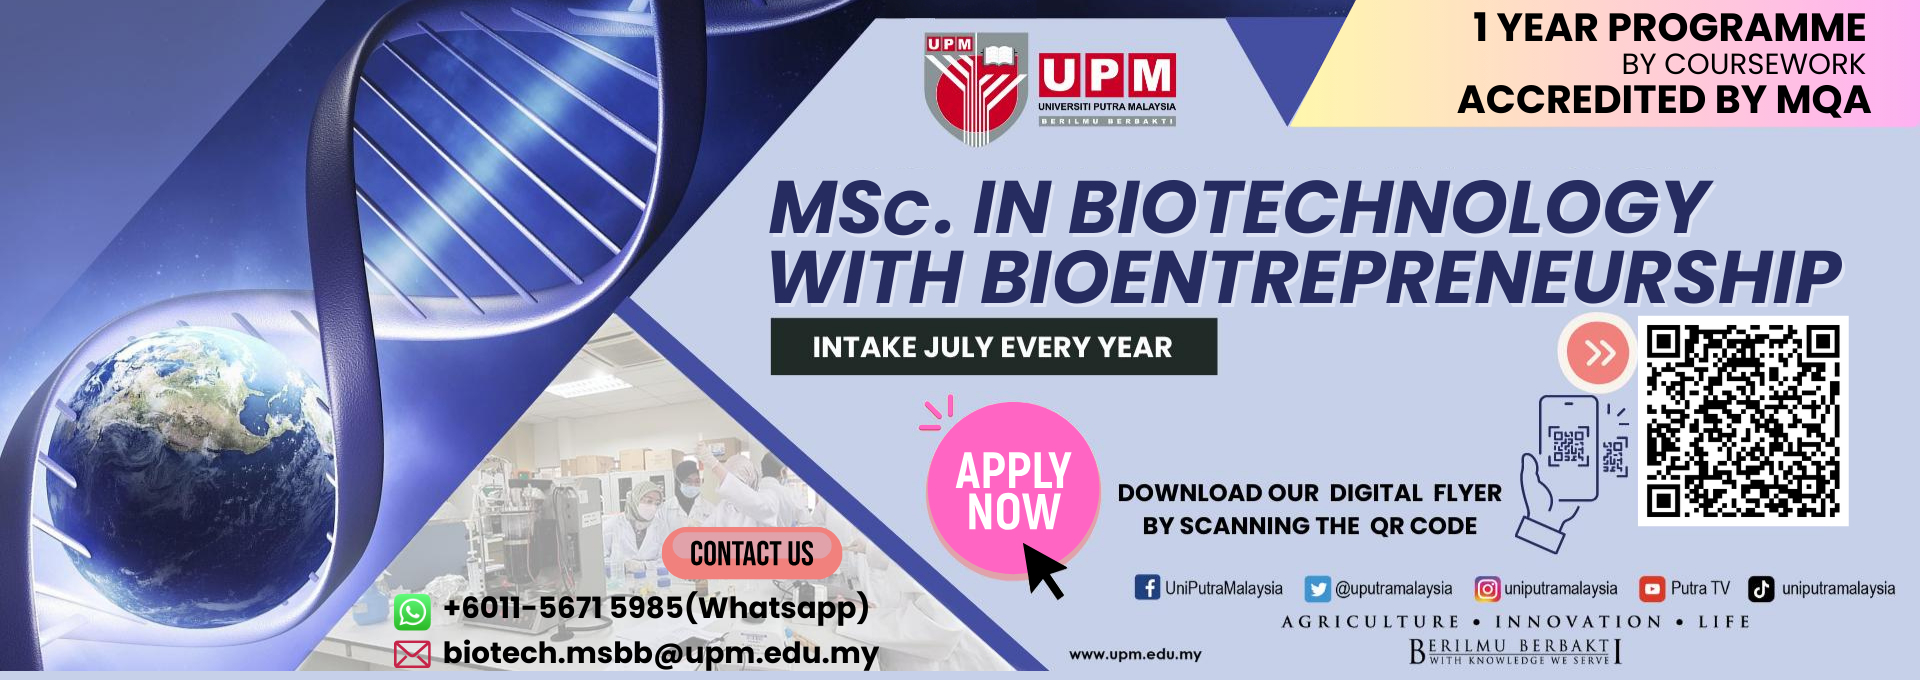 MSc Biotechnology with Bioentrepreneurship